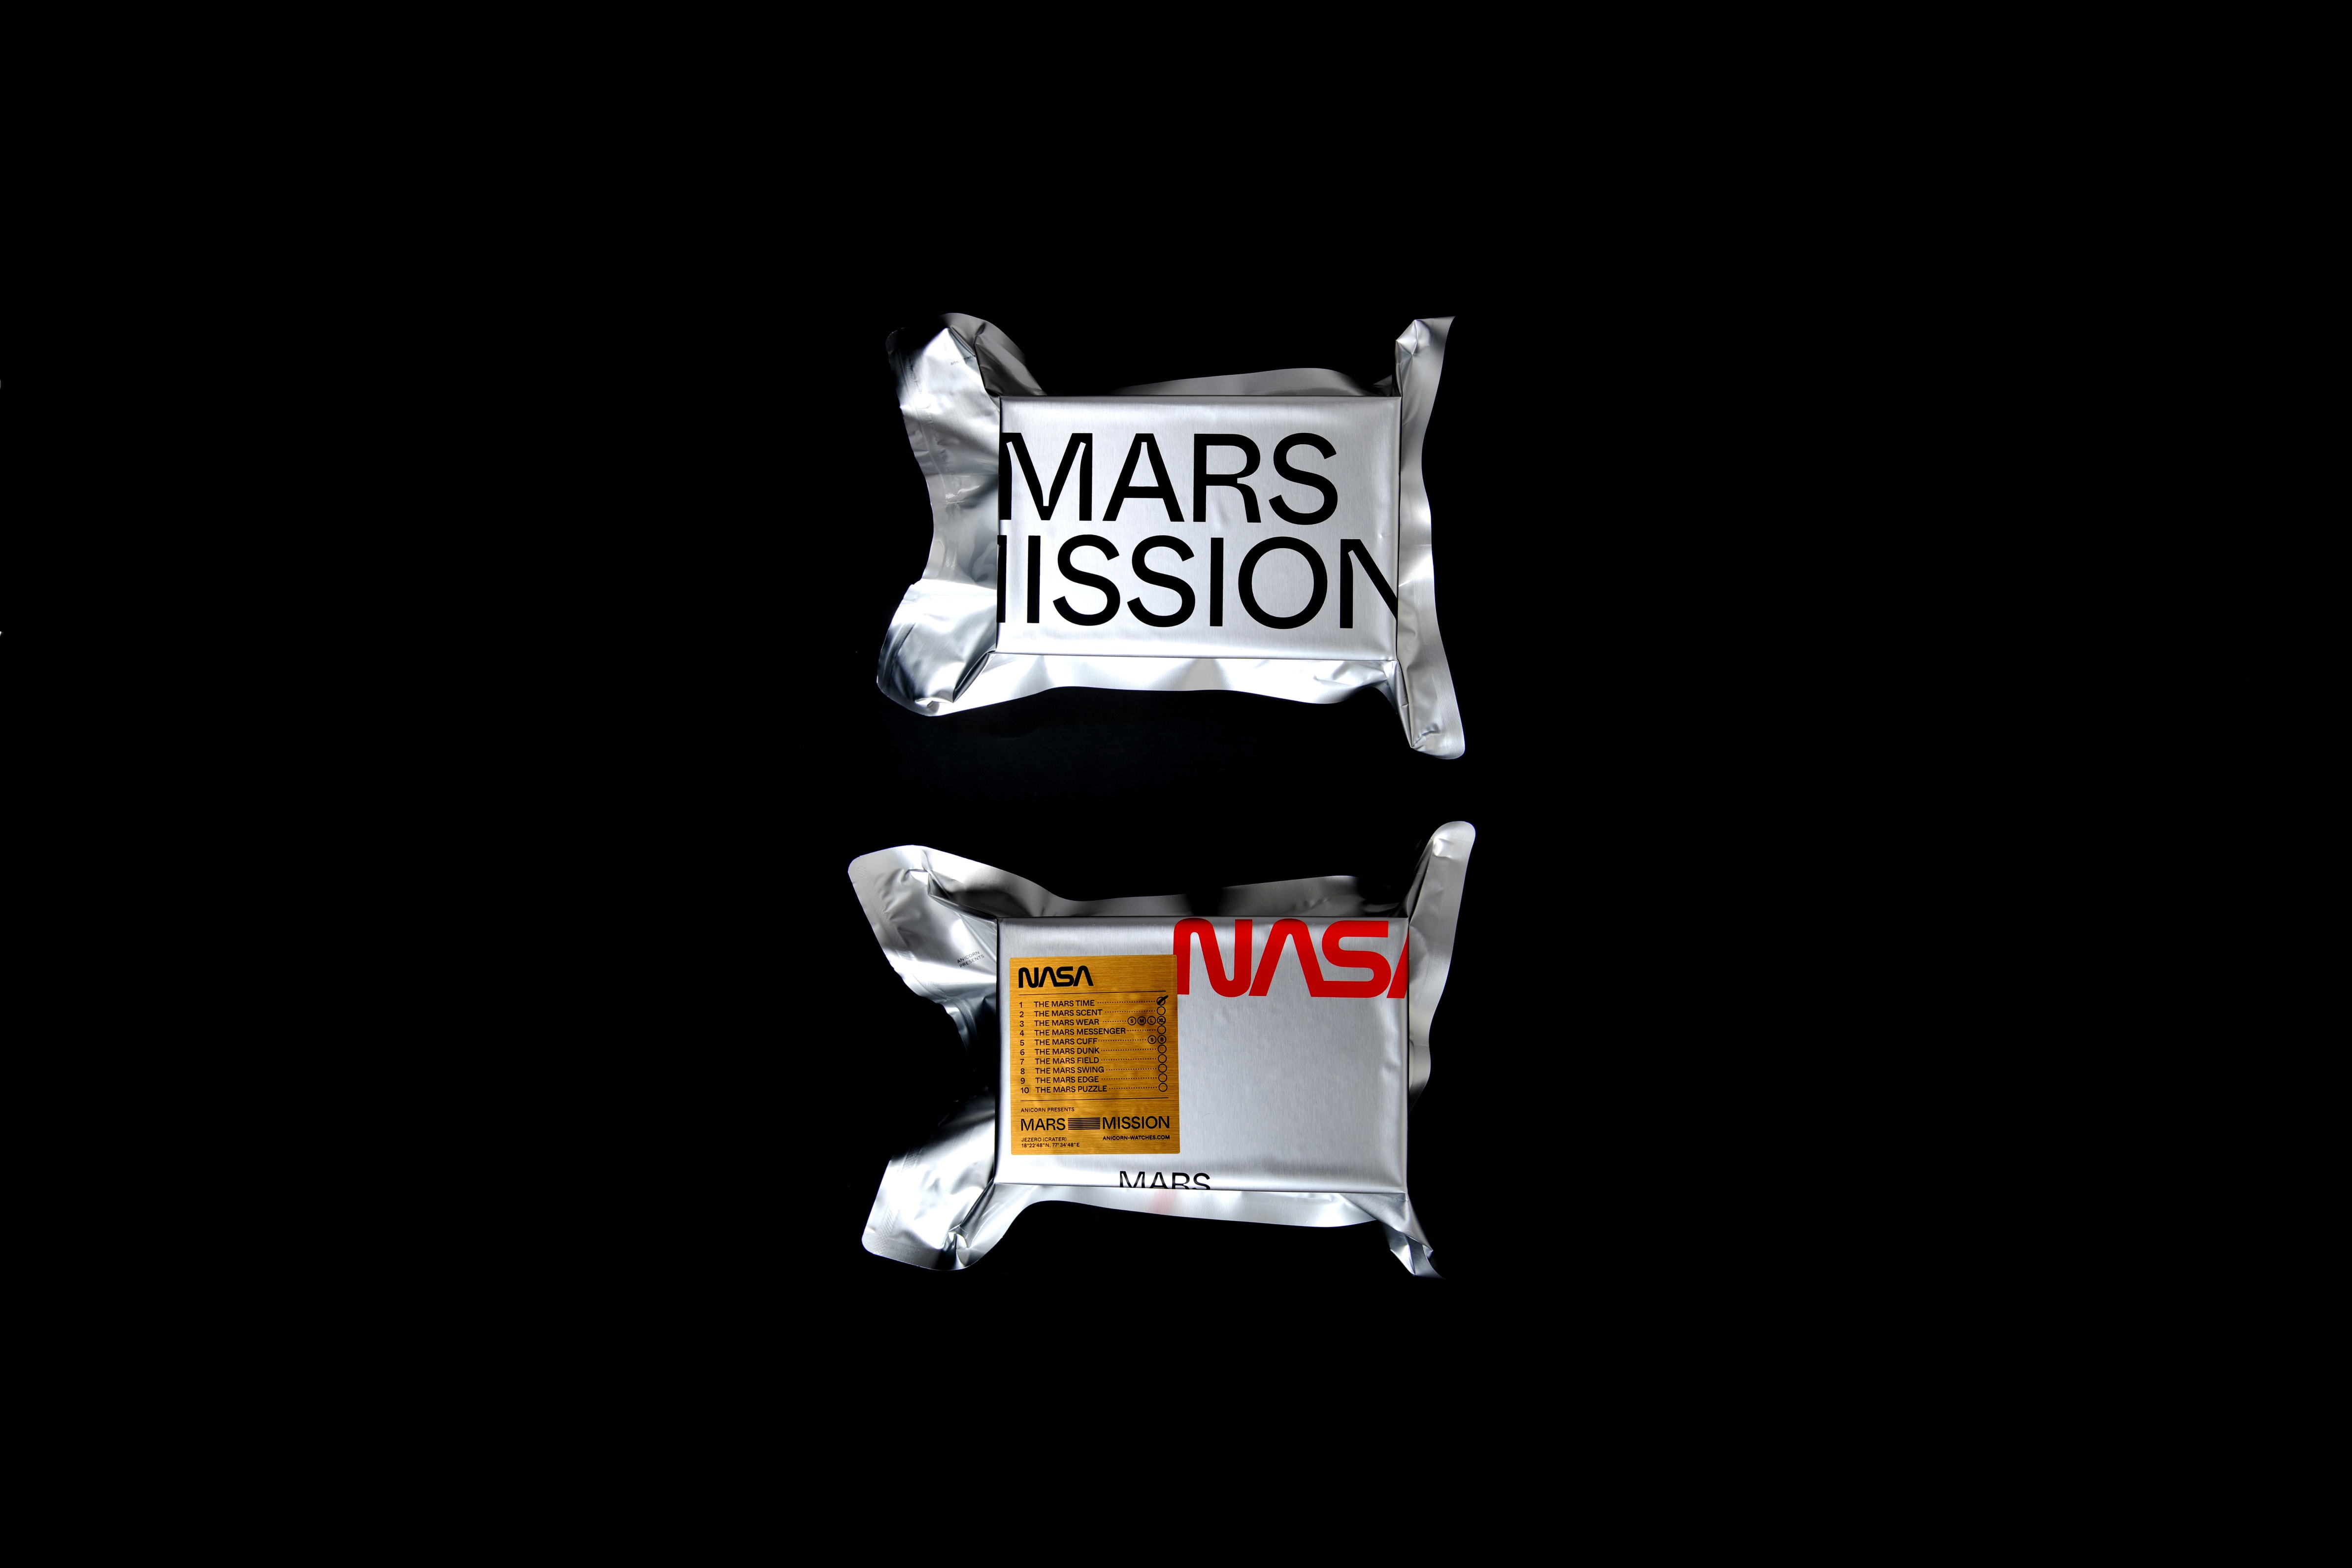 ANICORN x NASA 聯乘全新「MARS MISSION」限定系列